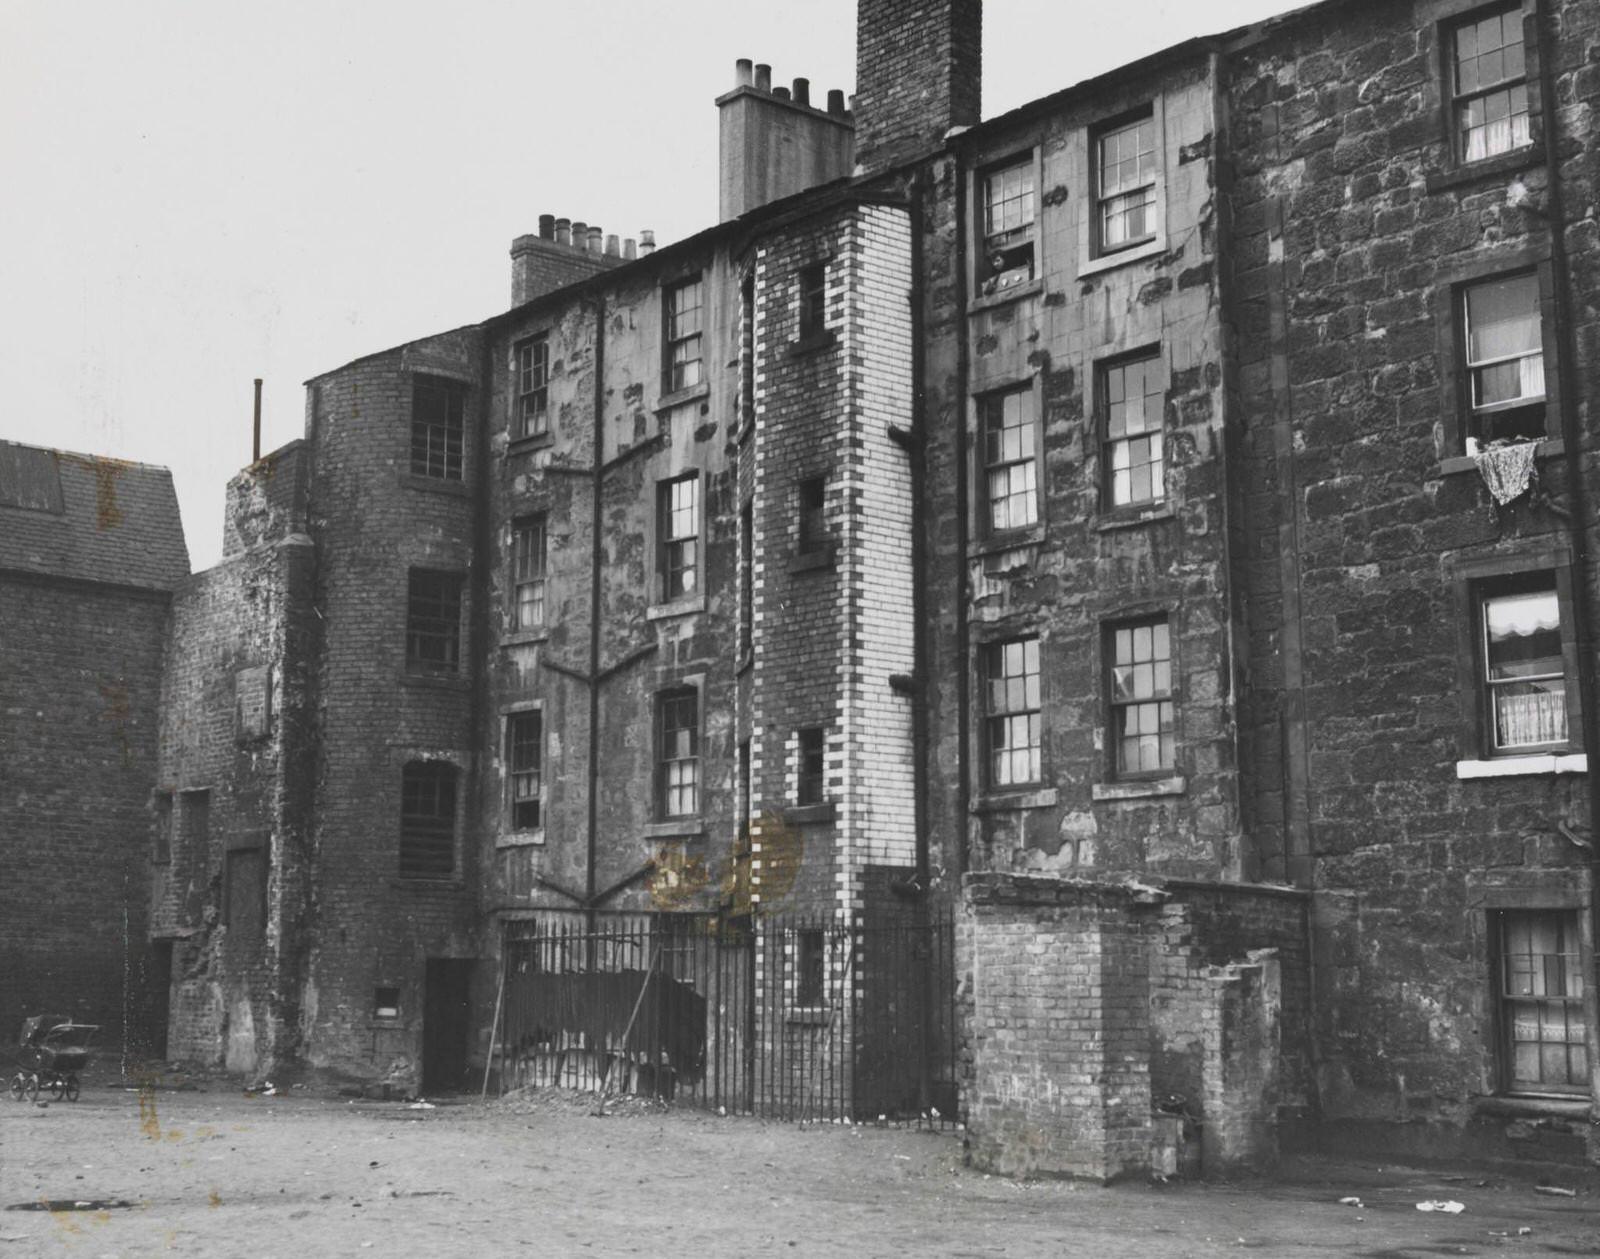 General scenes of a slum in the Gorbals area of Glasgow, 1952